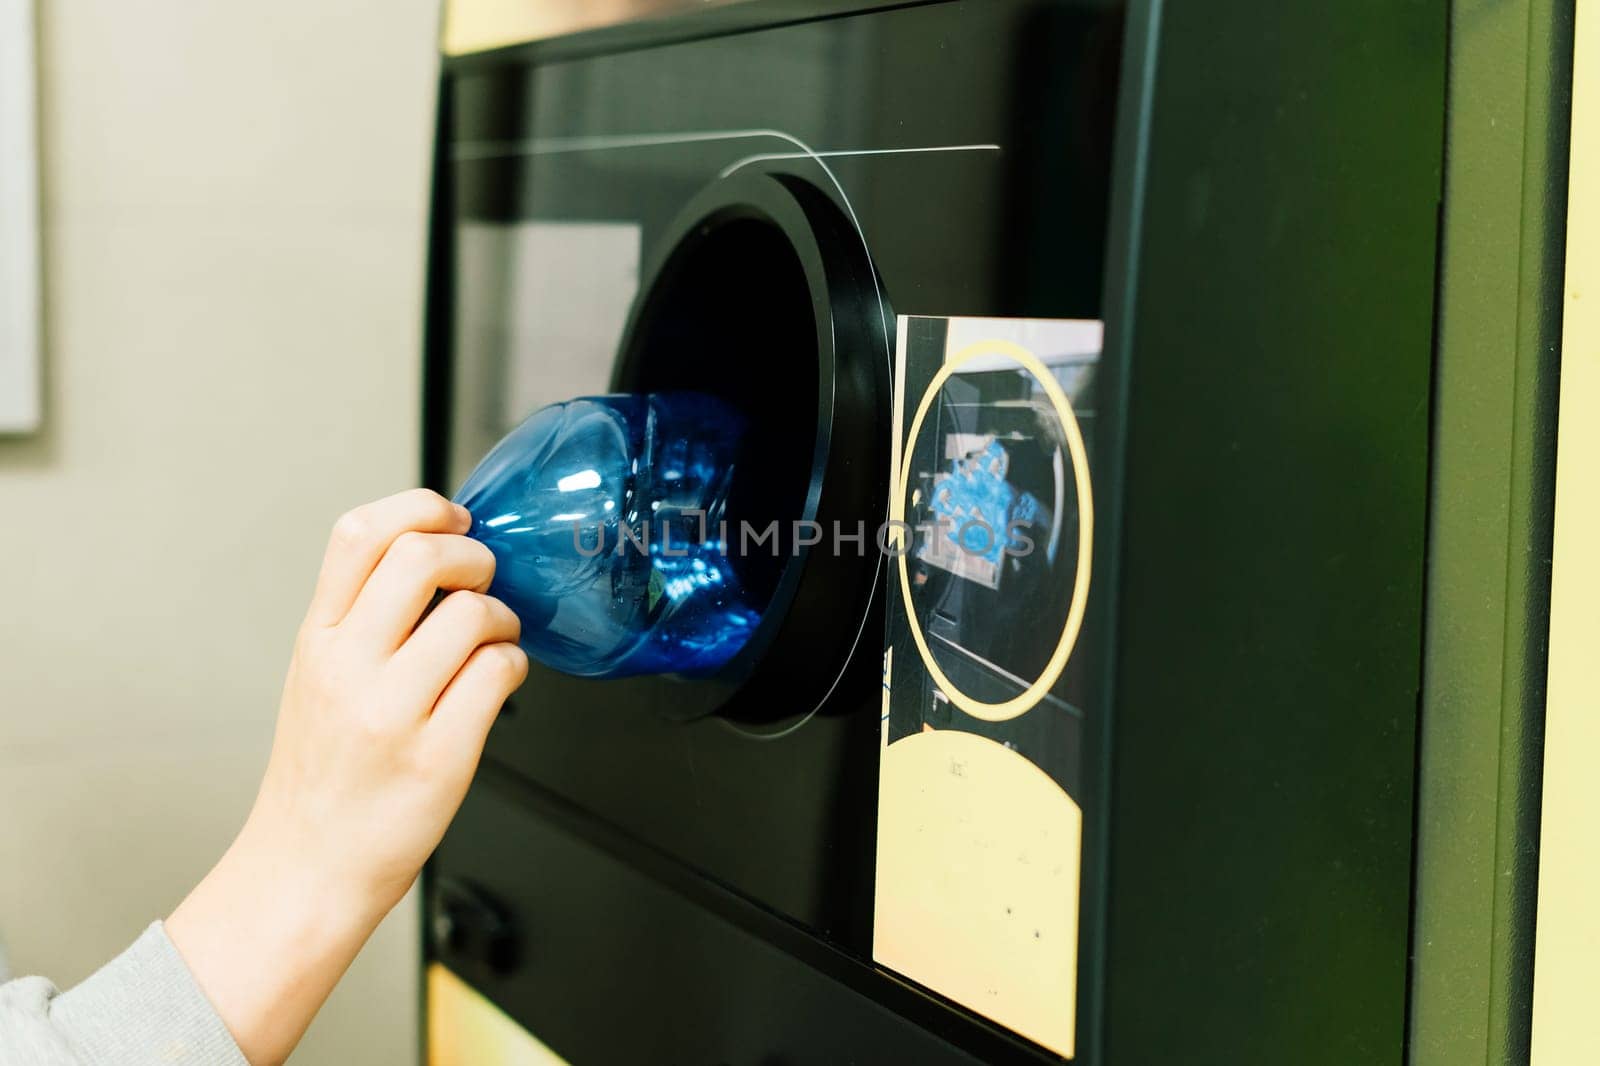 Reverse vending recycling machine that dispenses cash. Man hand puts plastic bottle to machine